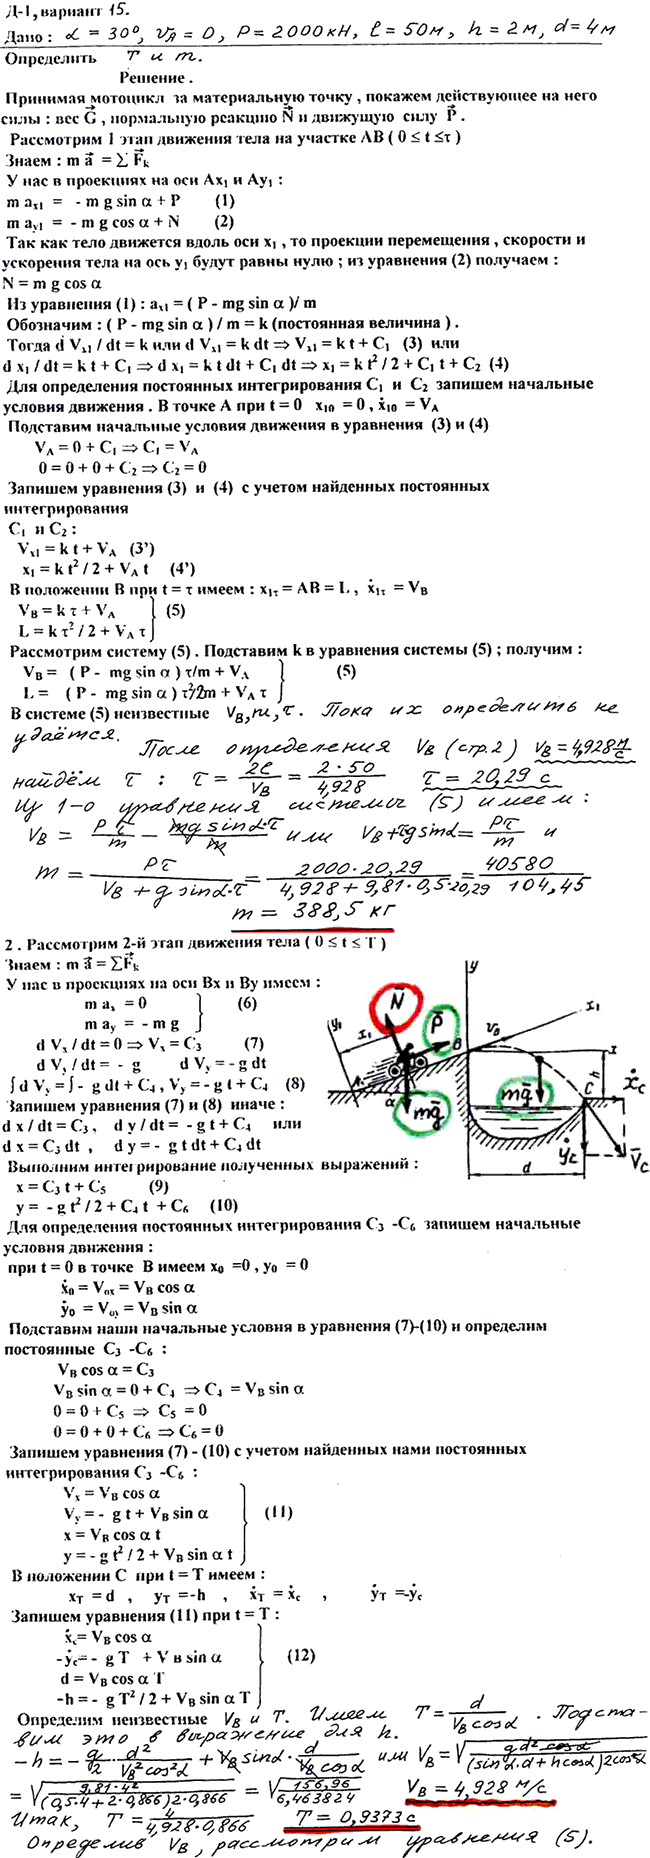 Задание Д.1 вариант 15. Дано: α=30°; vA=0; P=2 кН, l=50 м; h=2 м; d=4 м. Определить T и m.